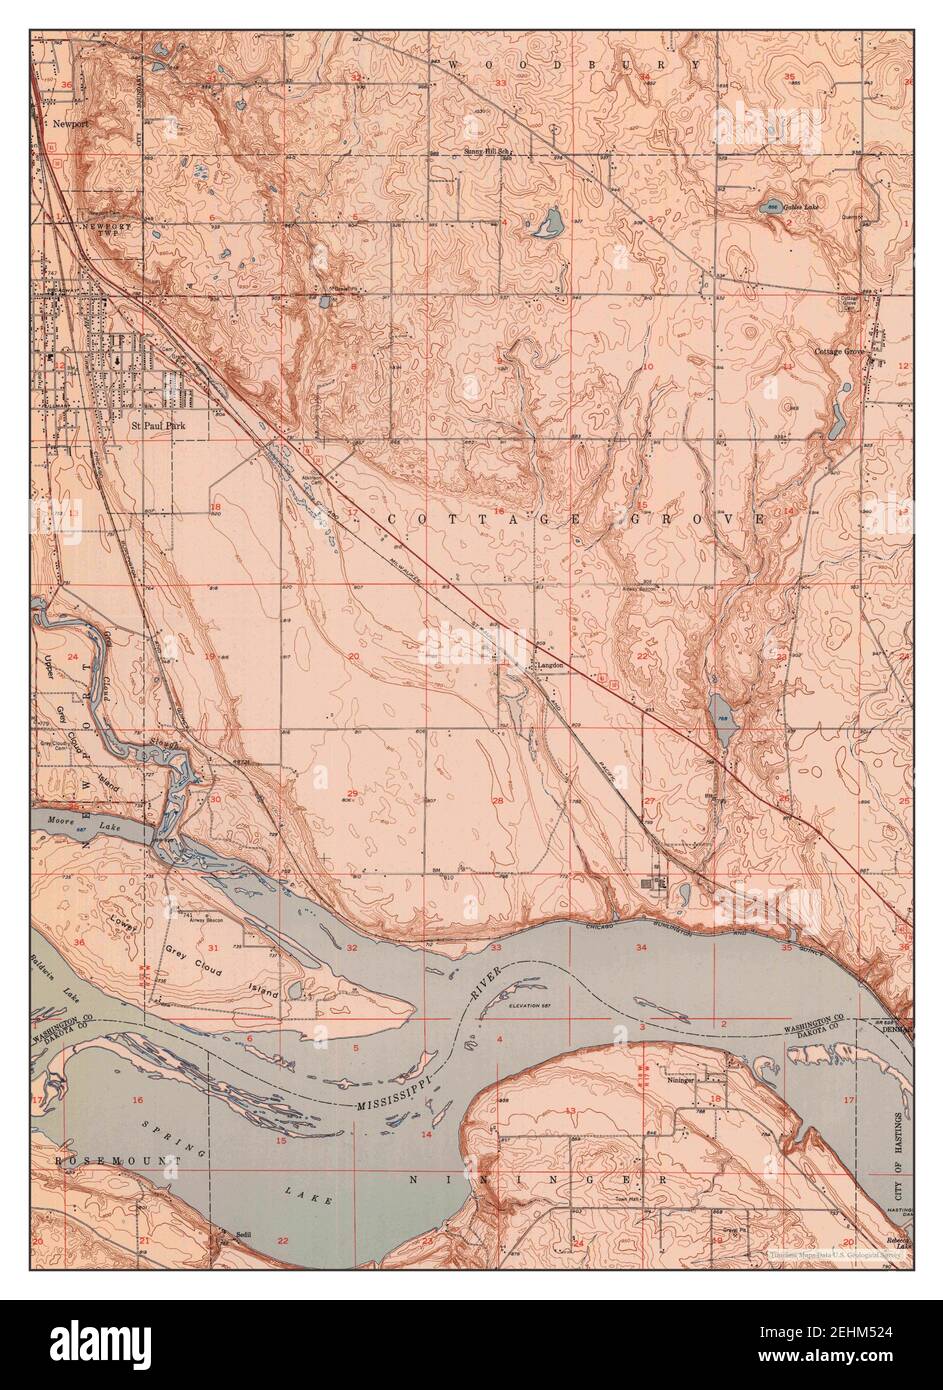 St Paul Park, Minnesota, map 1950, 1:24000, United States of America by  Timeless Maps, data U.S. Geological Survey Stock Photo - Alamy